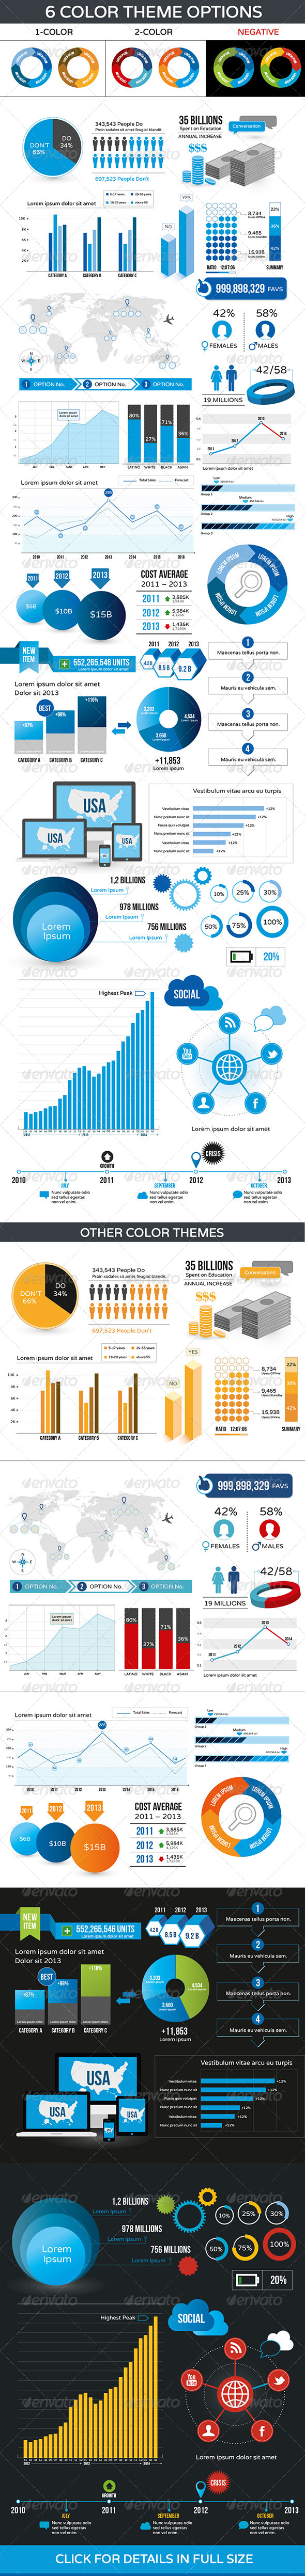 Presentation Infographic Elements-6 Color Options